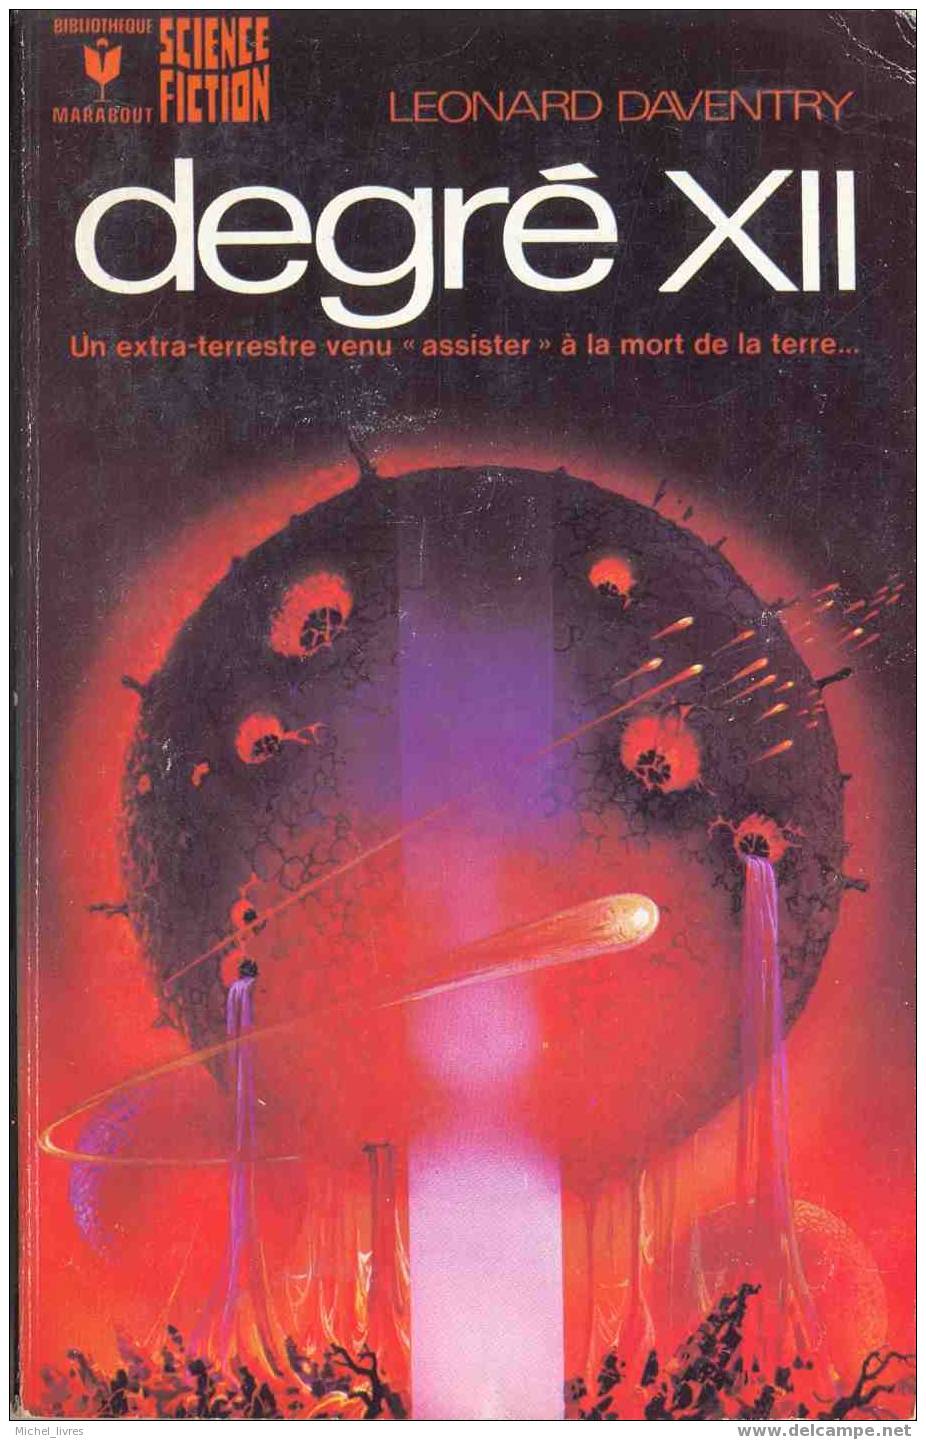 Marabout Science-fiction 444 - Léonard Daventry - Degré XII - 1973 - TBE - Marabout SF